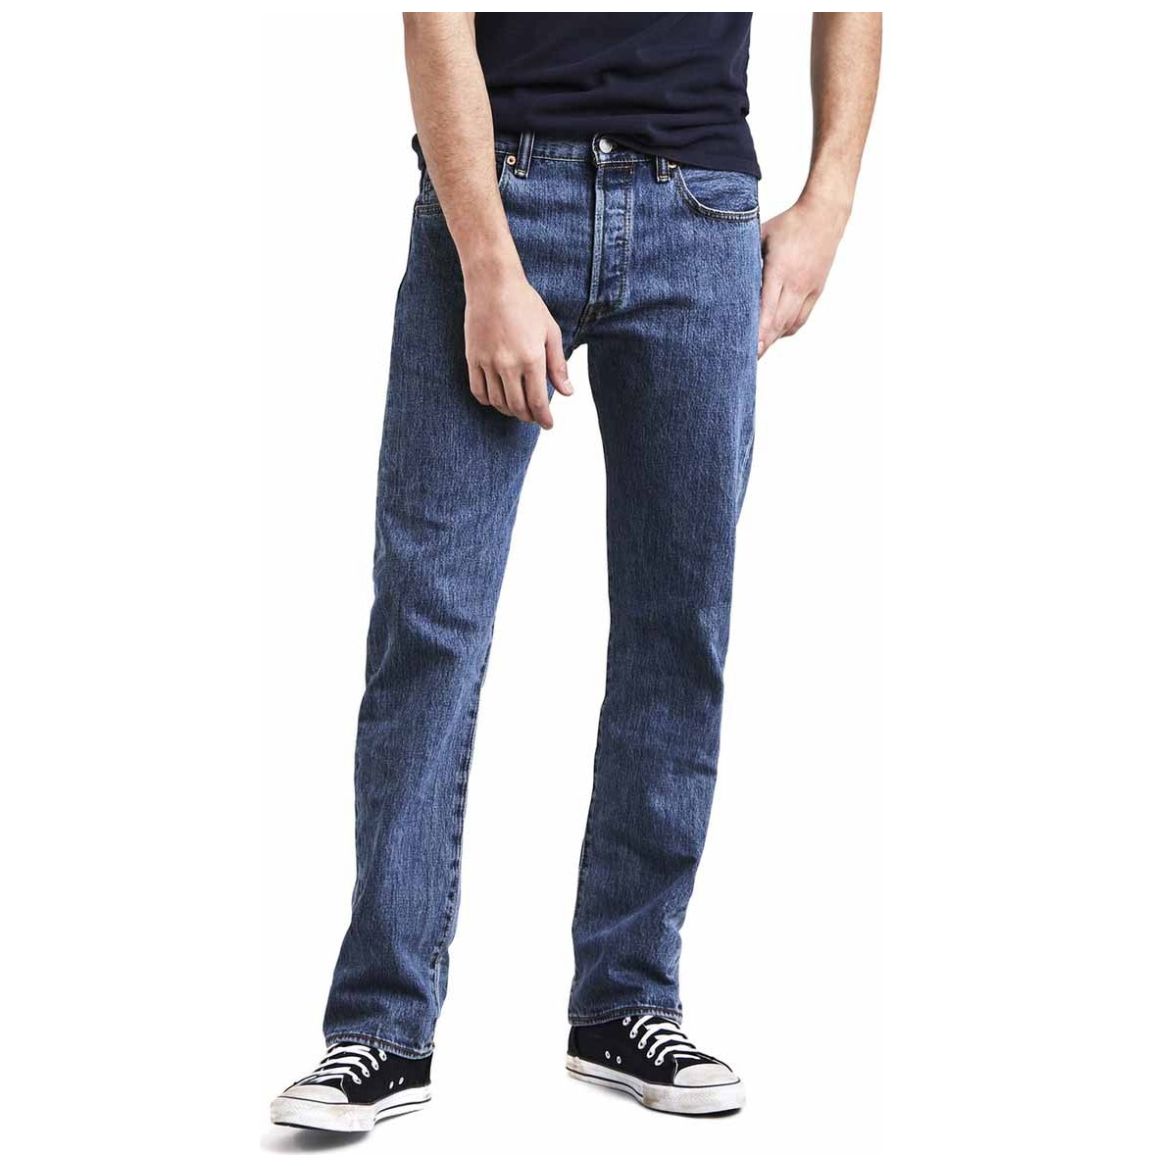 Jeans 501 Original Fit Levi S Modelo 00501 0193 Para Caballero Sears